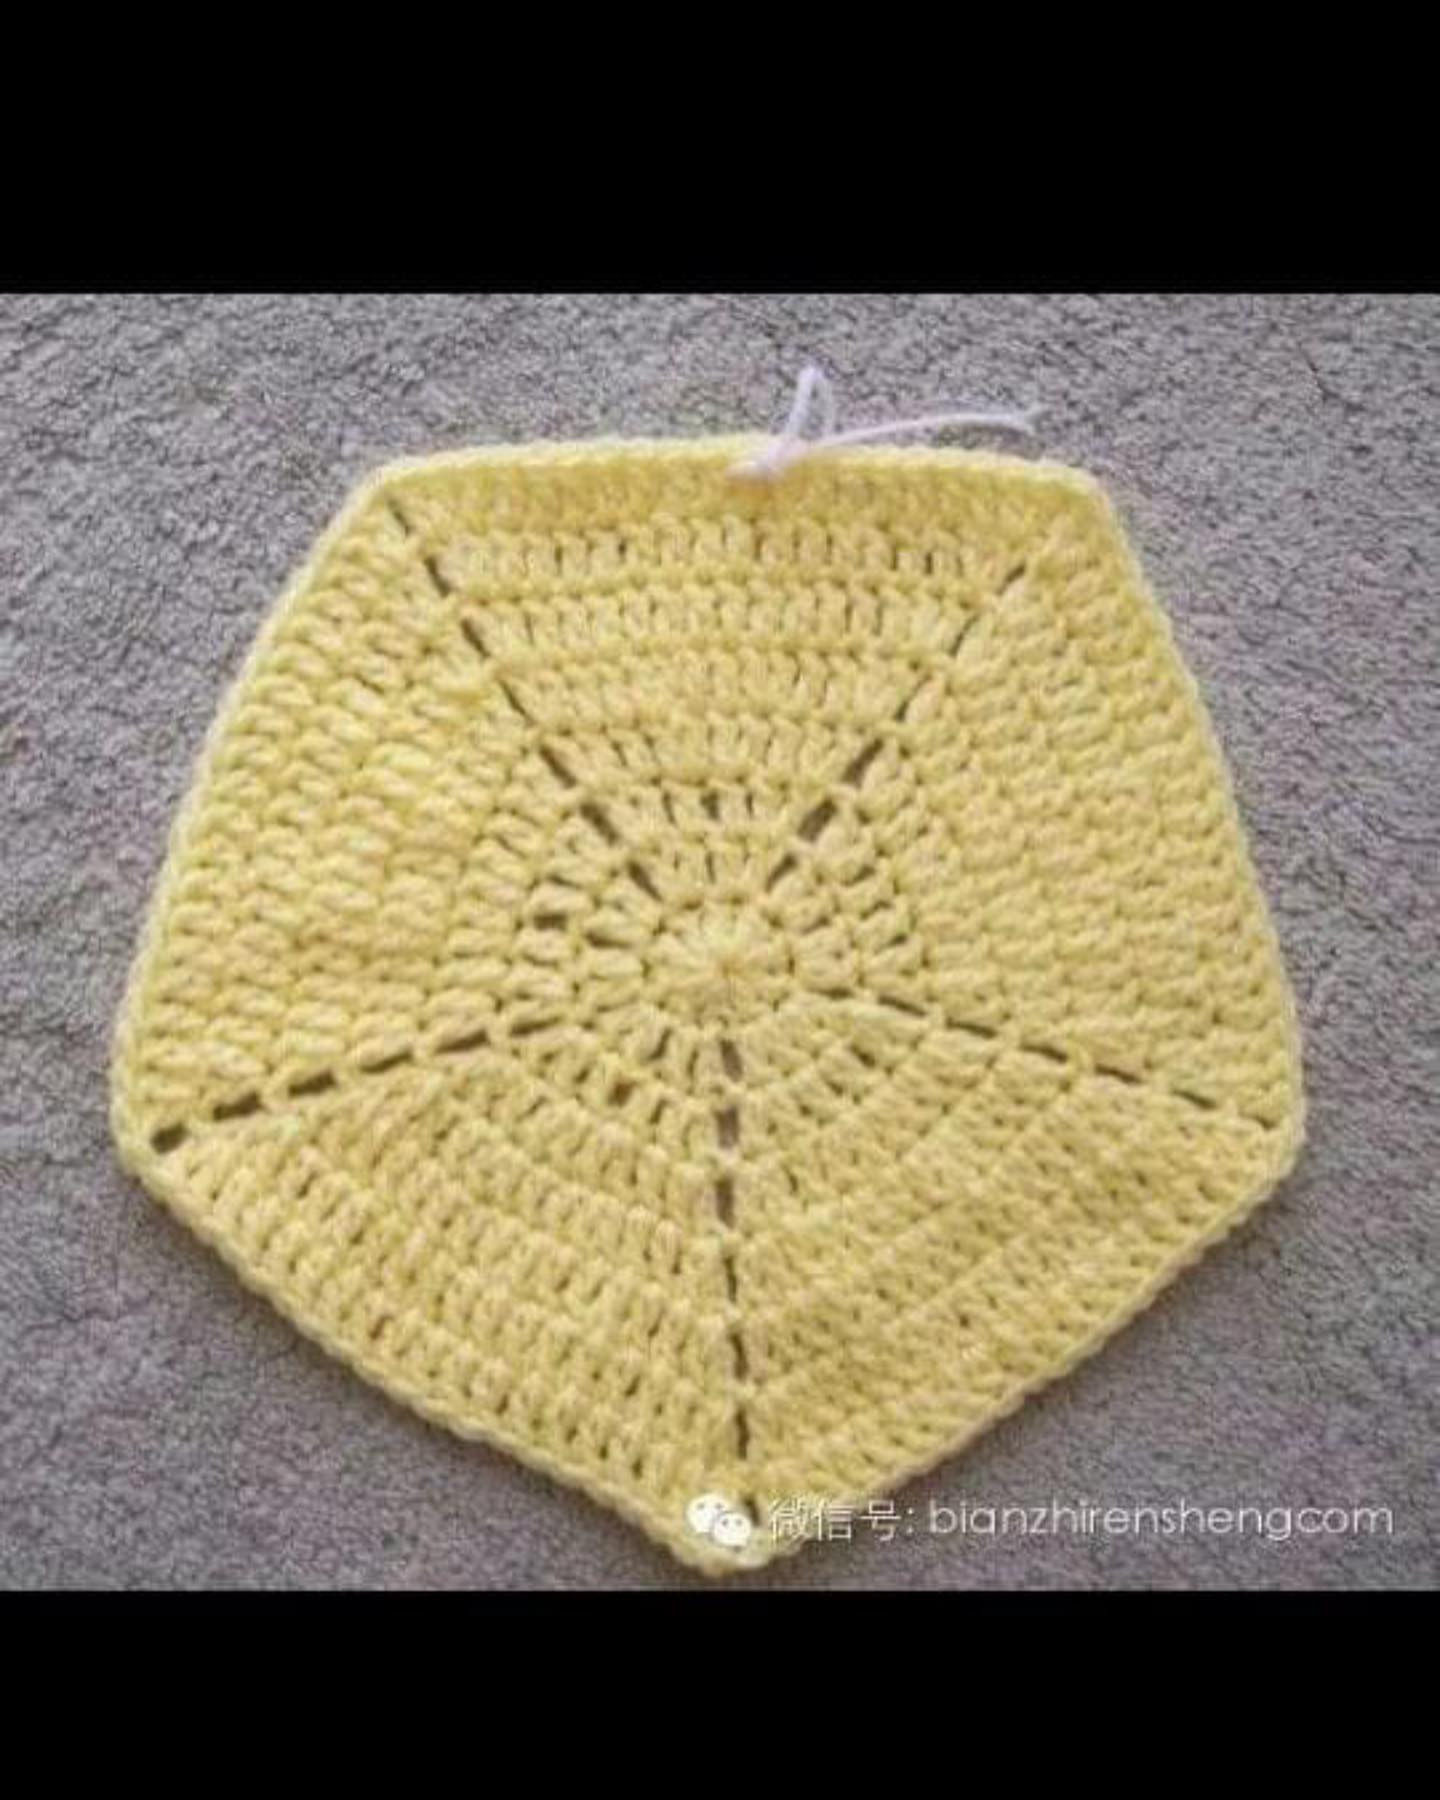 baby star free crochet pattern